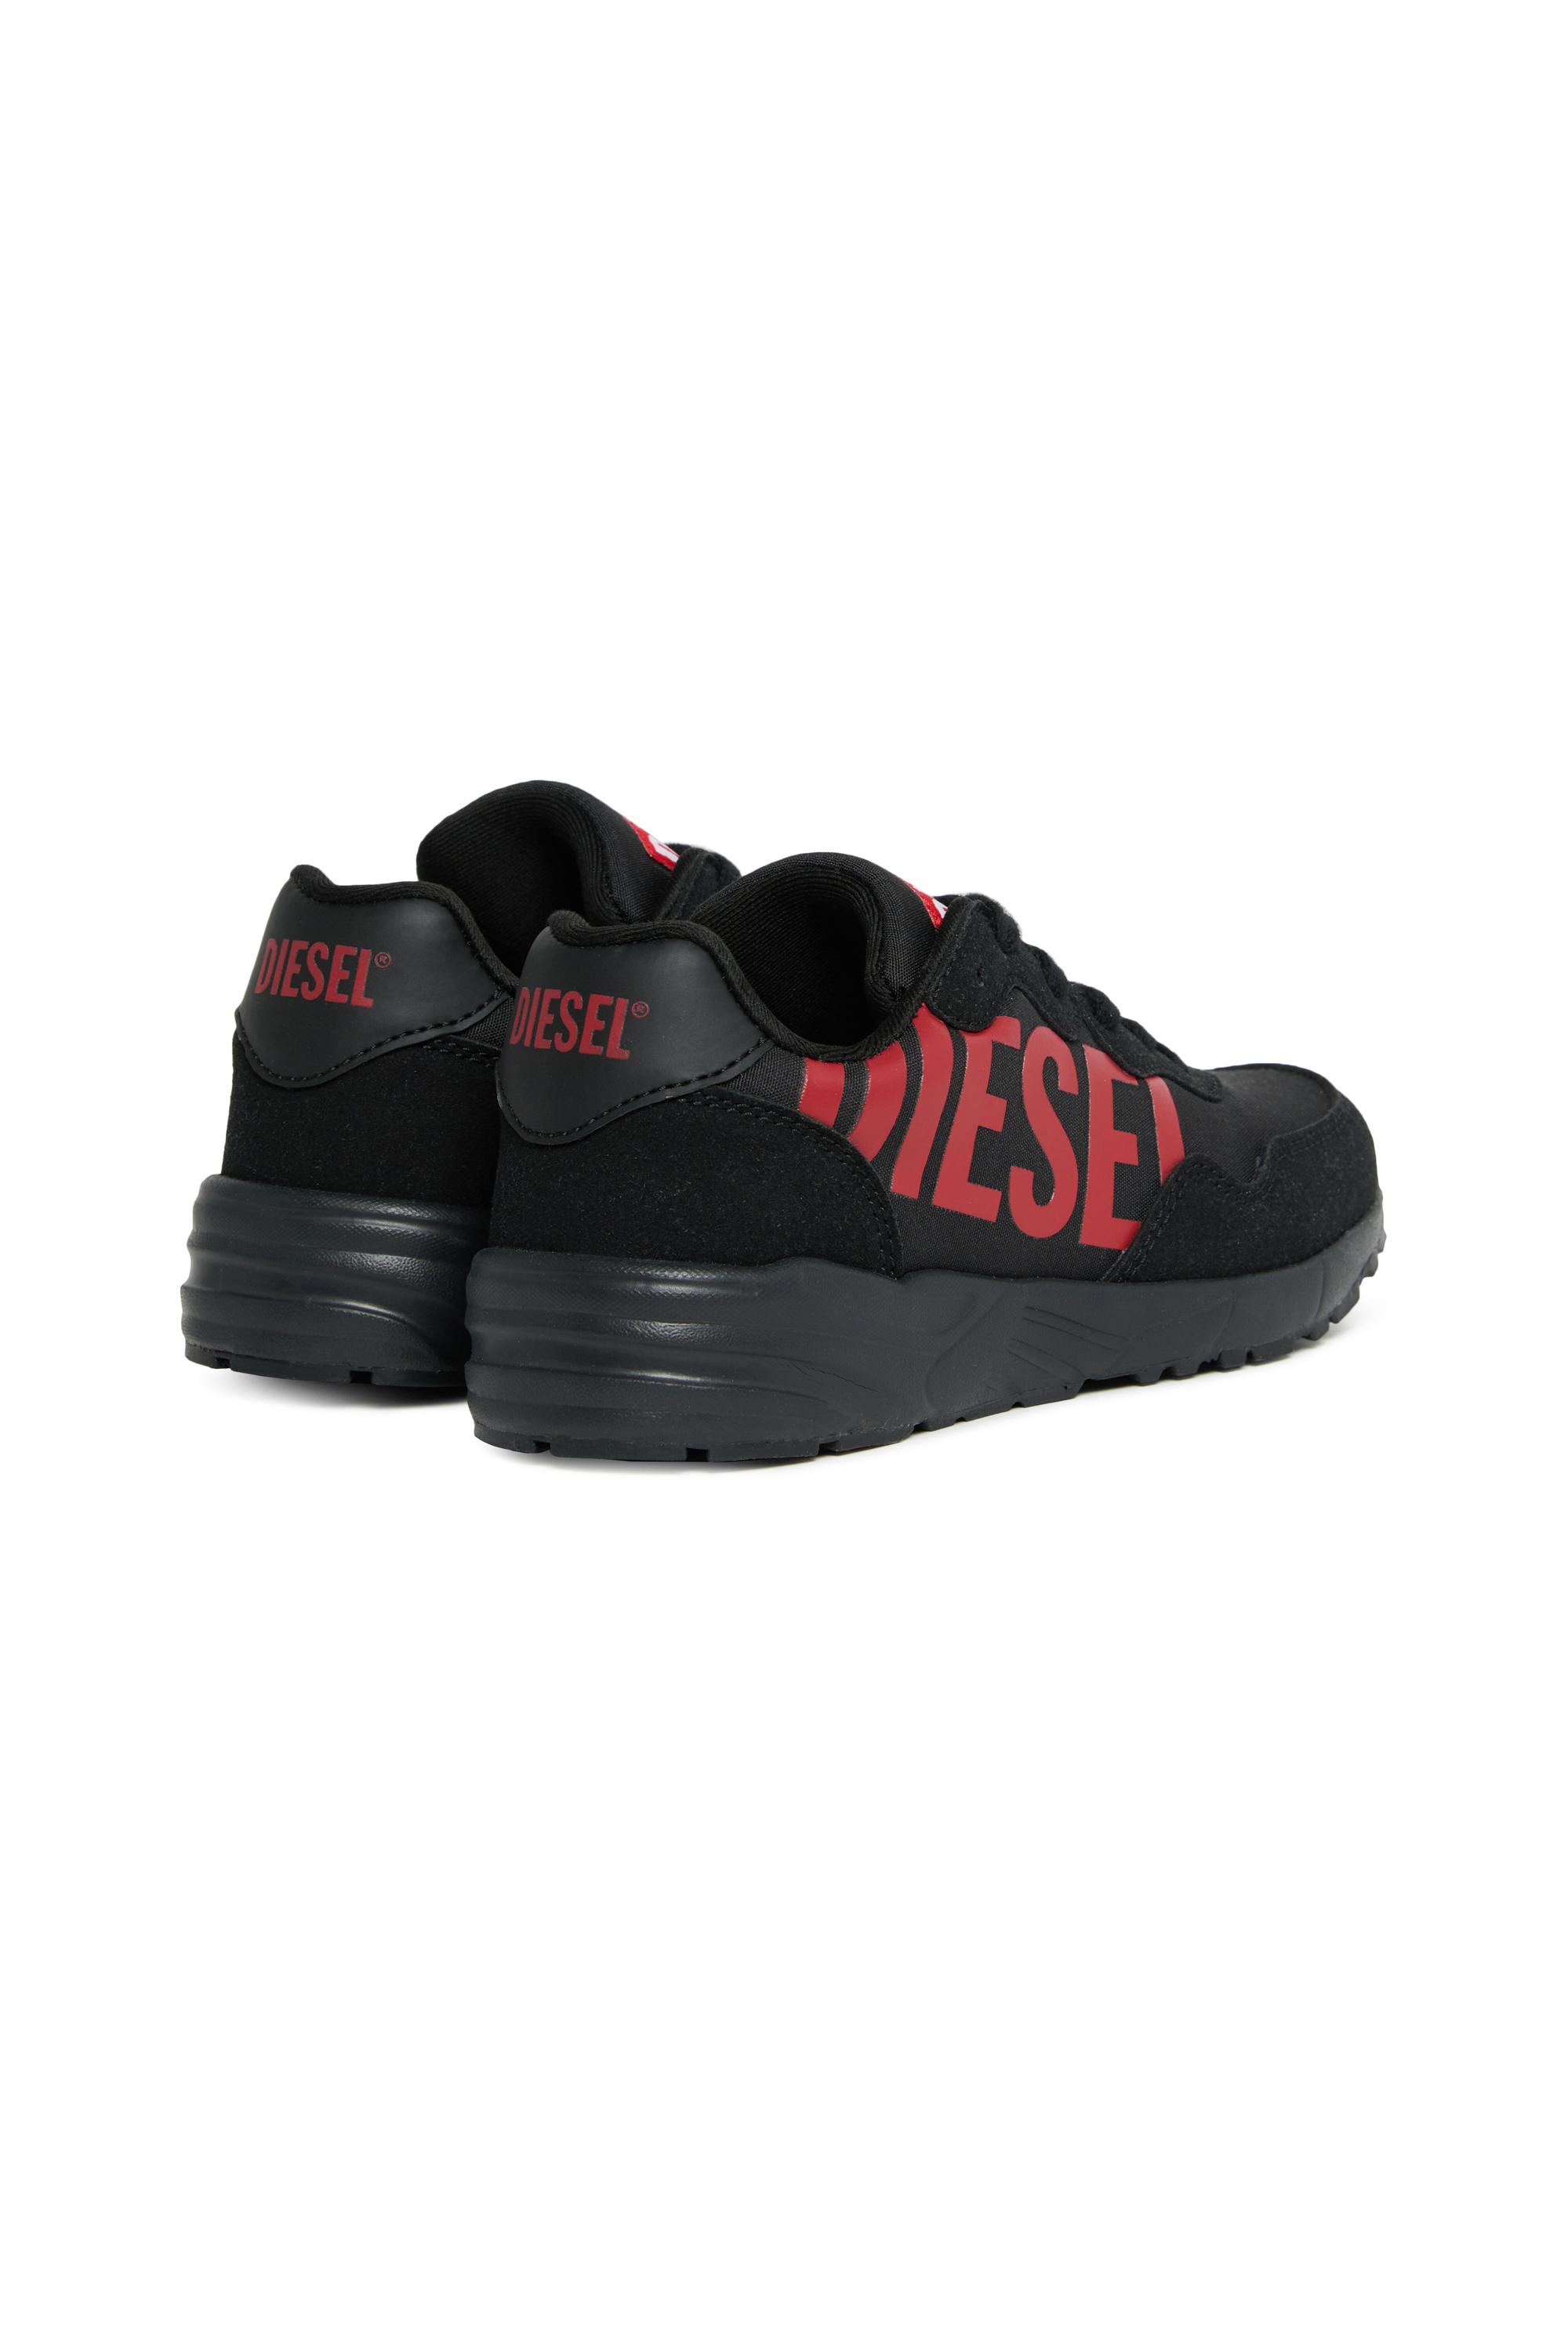 Diesel - S-STAR LIGHT LC, Unisex Sneaker in nylon con stampa Diesel lucida in Multicolor - Image 3